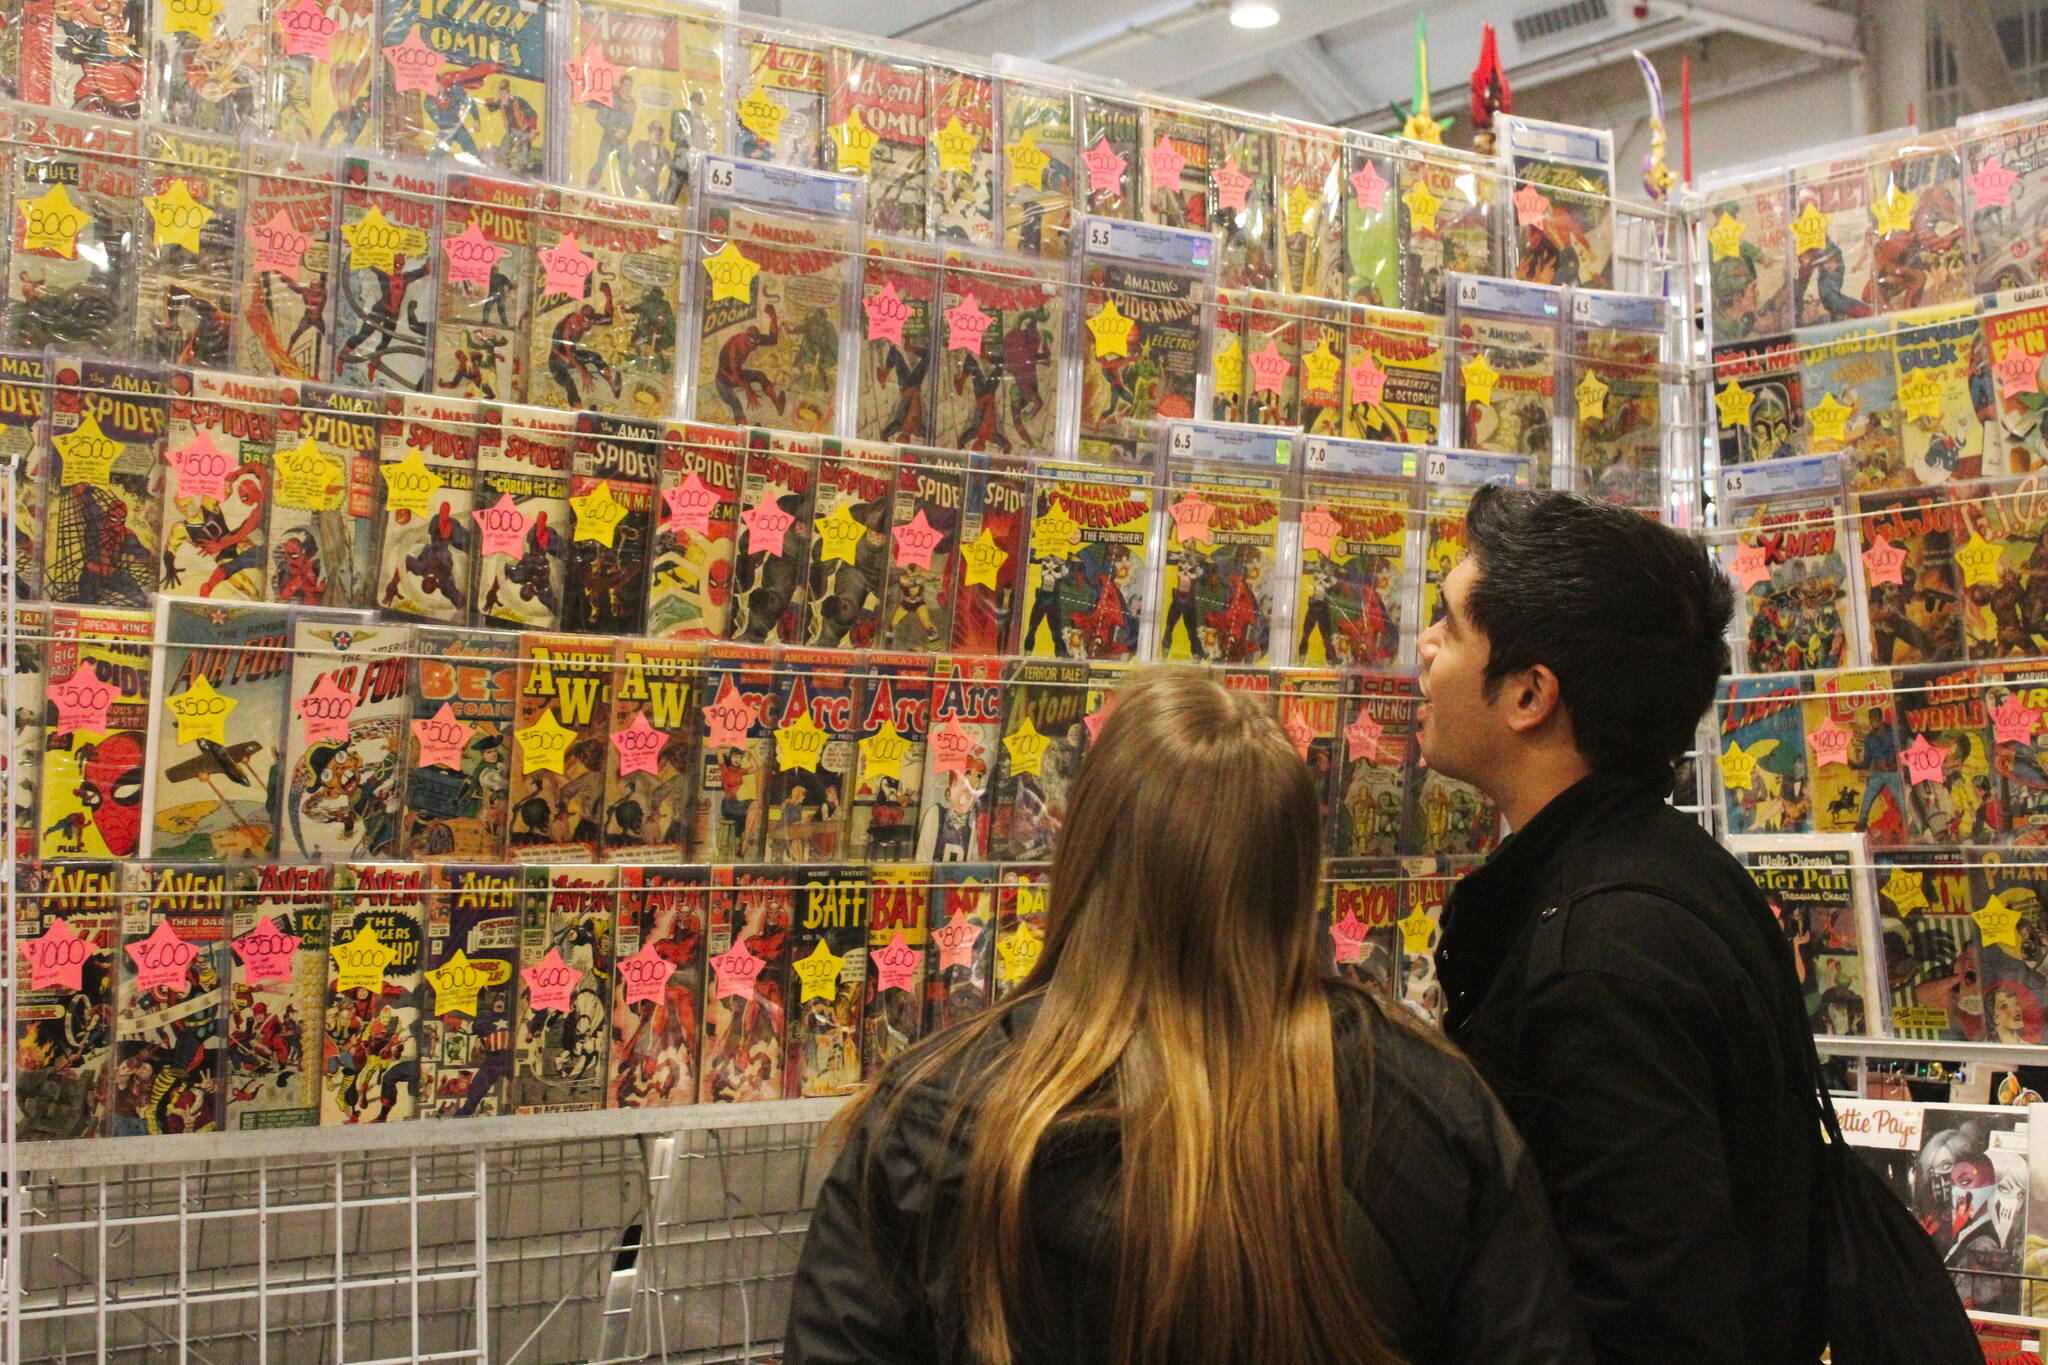 Comic book collection is still a staple of Emerald City Comic Con. Photo by Bailey Jo Josie/Alb Media.